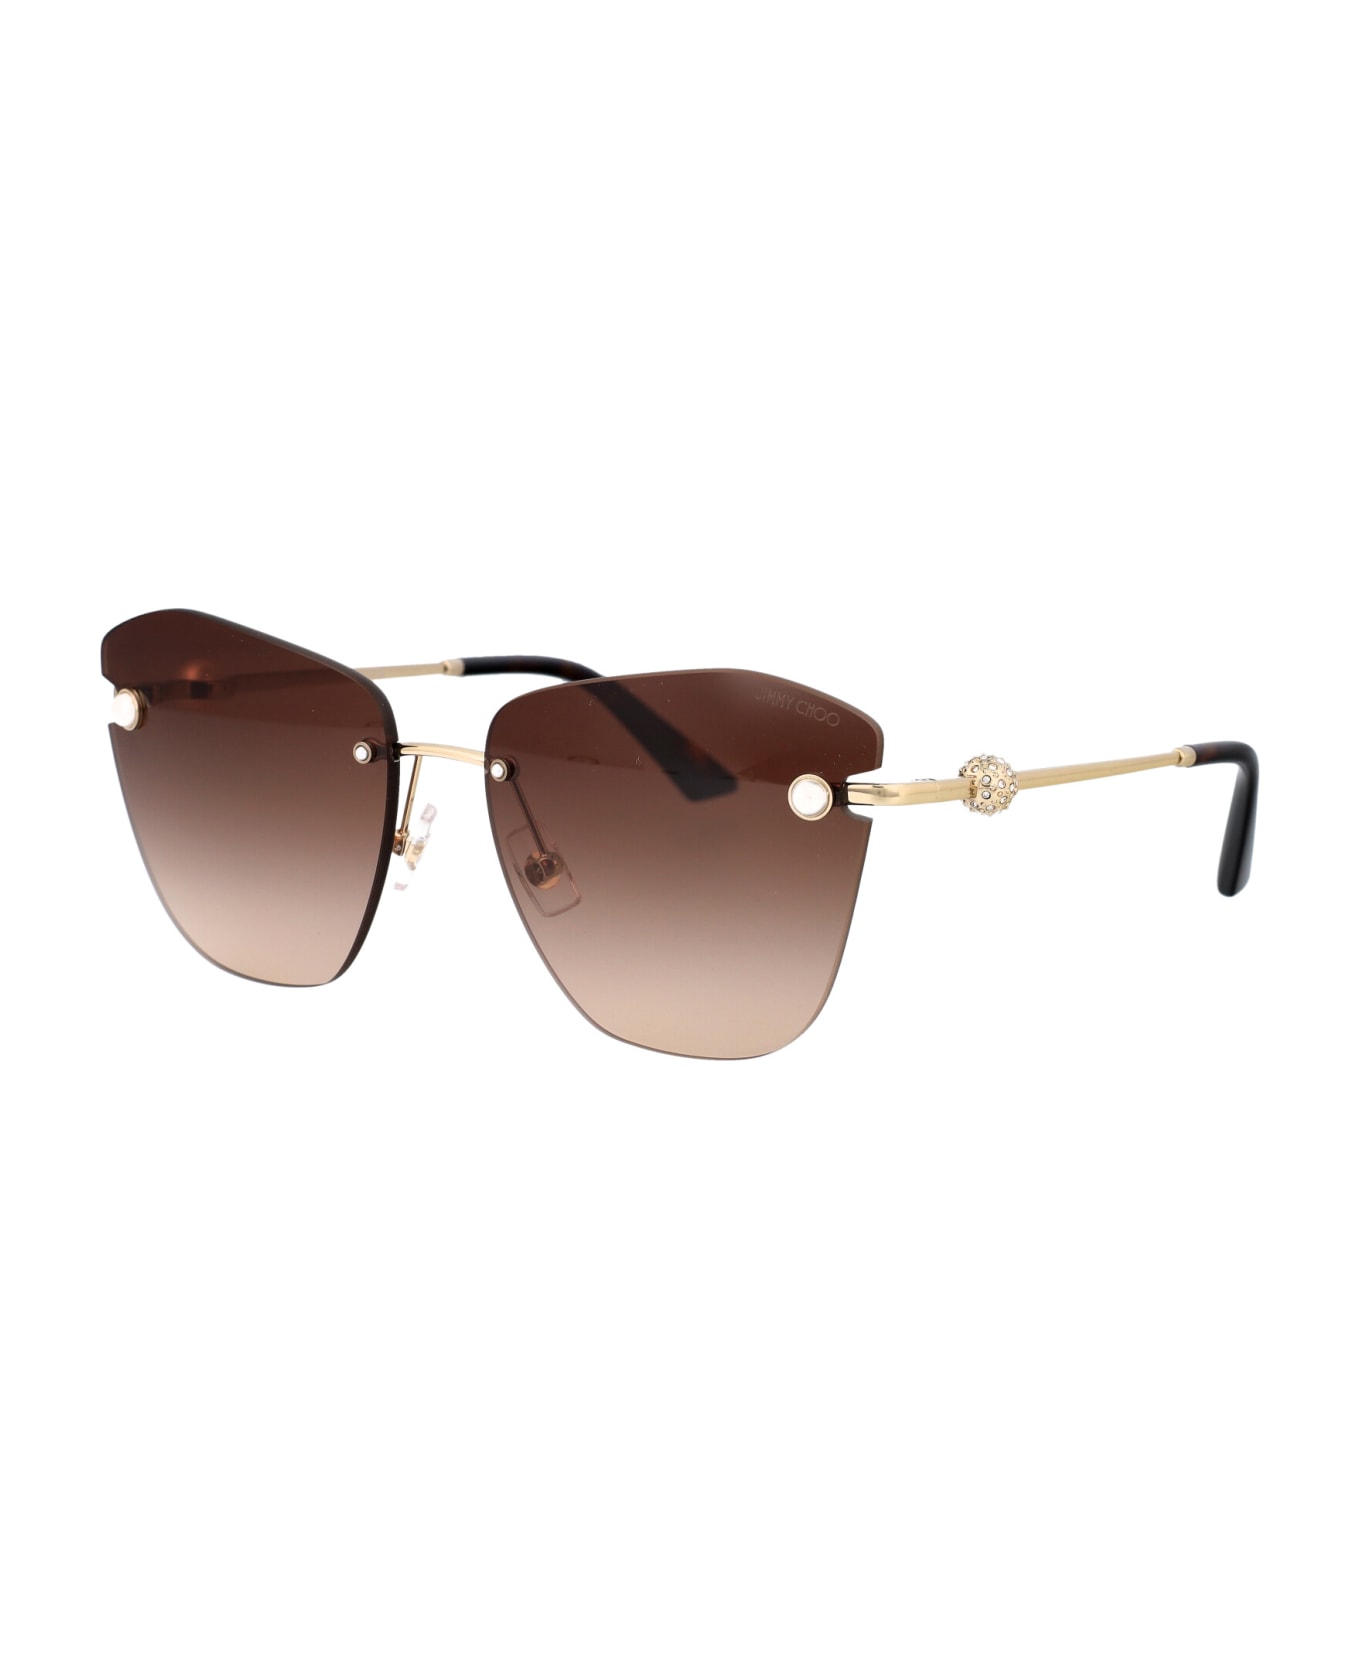 Jimmy Choo Eyewear 0jc4004hb Sunglasses - 300613 Pale Gold